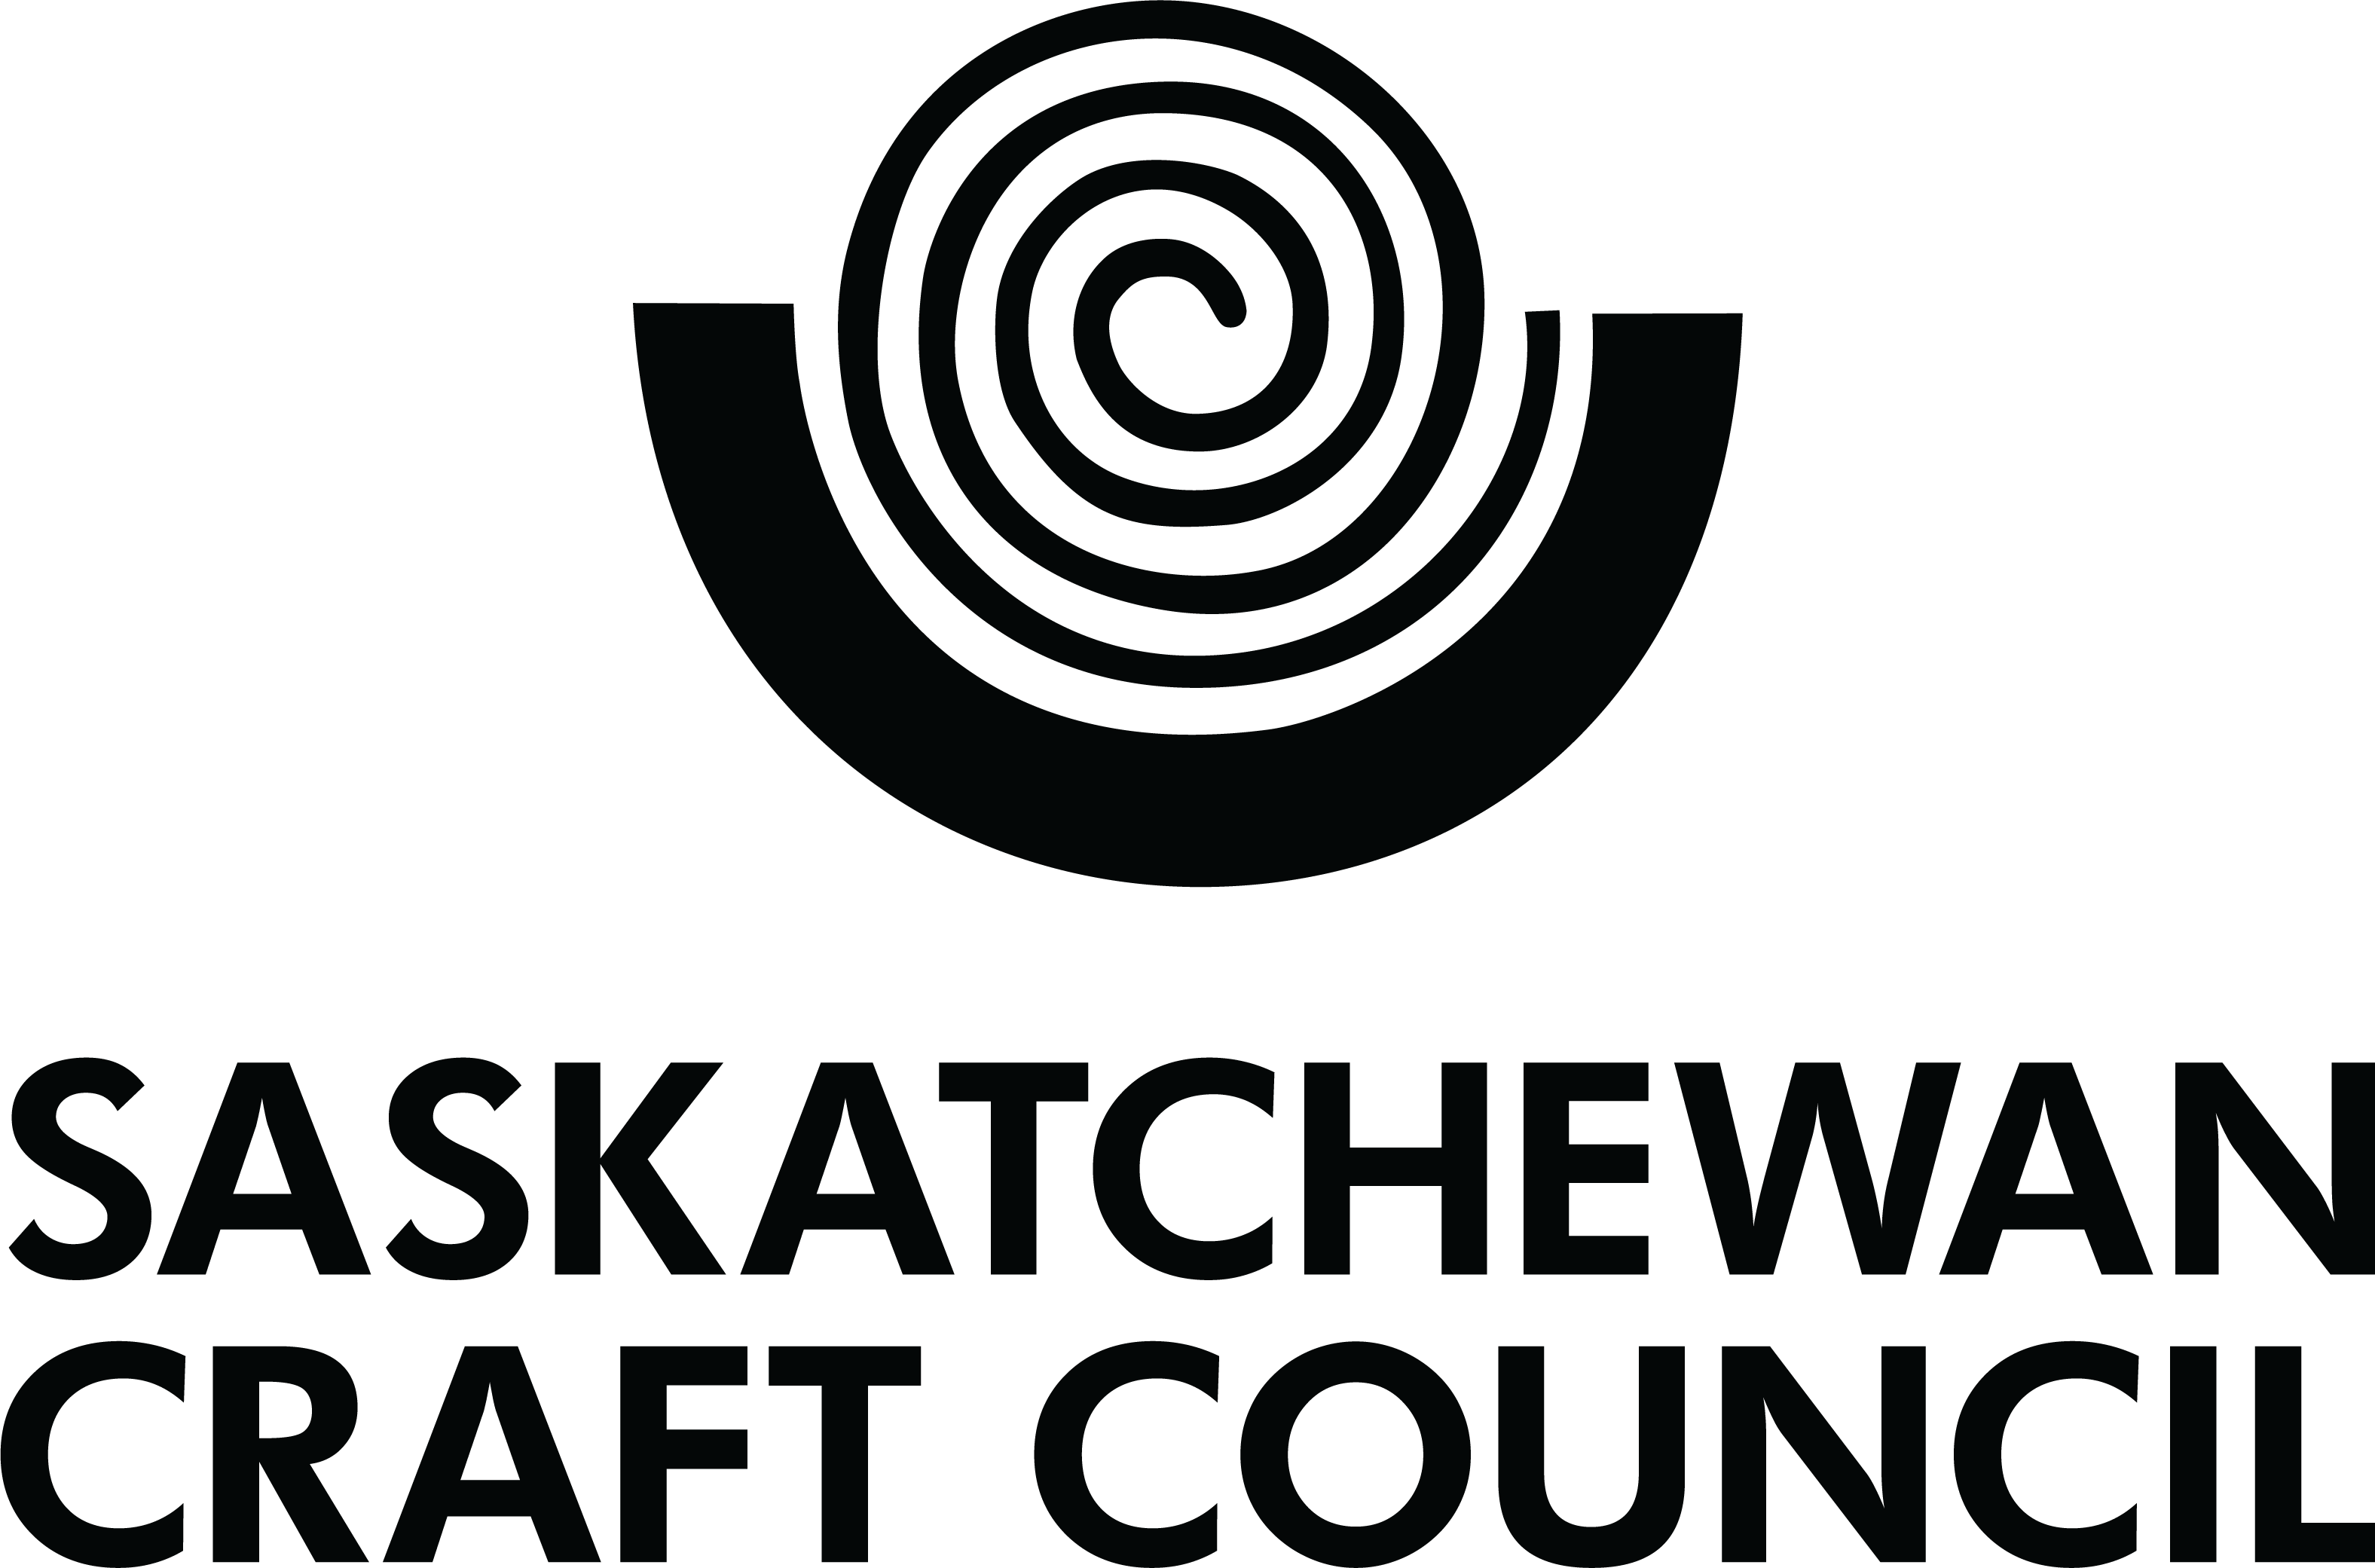 Saskatchewan Craft Council